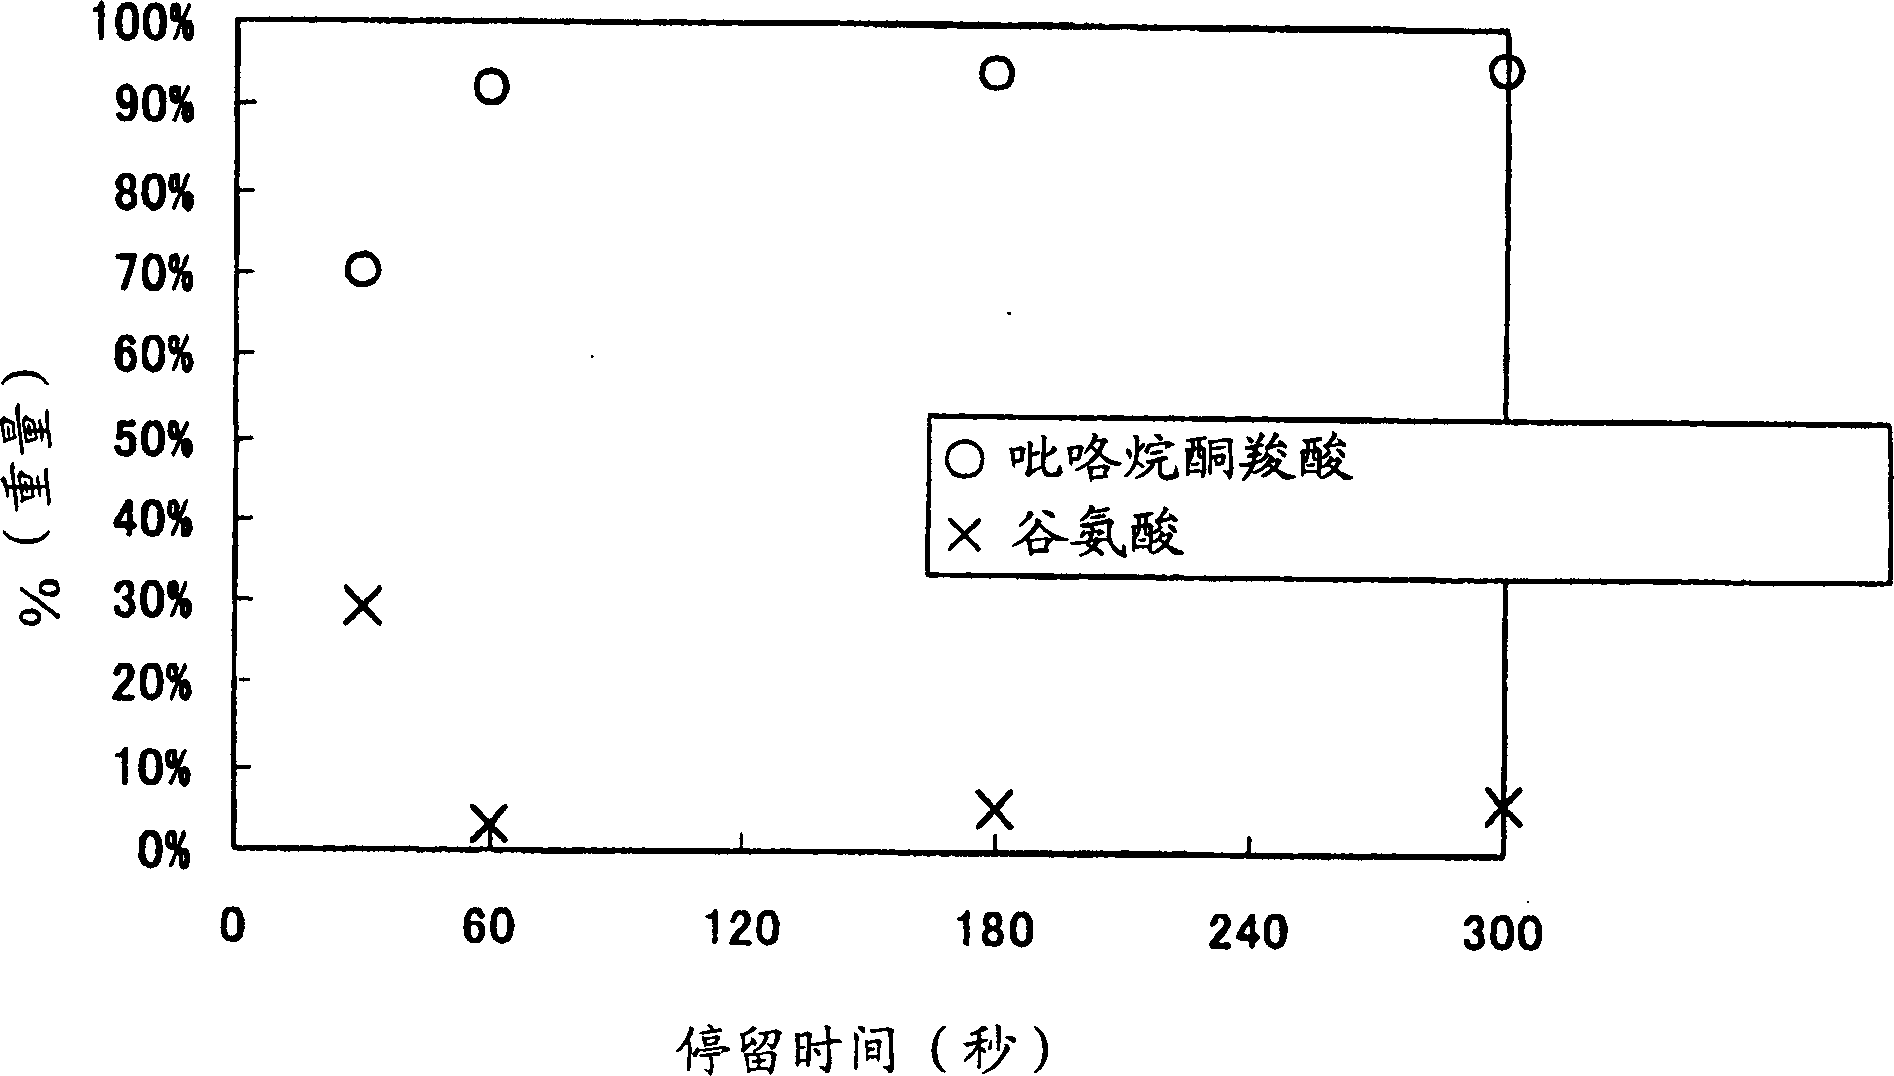 Production process of pyrrolidone carboxylic acid and its salt